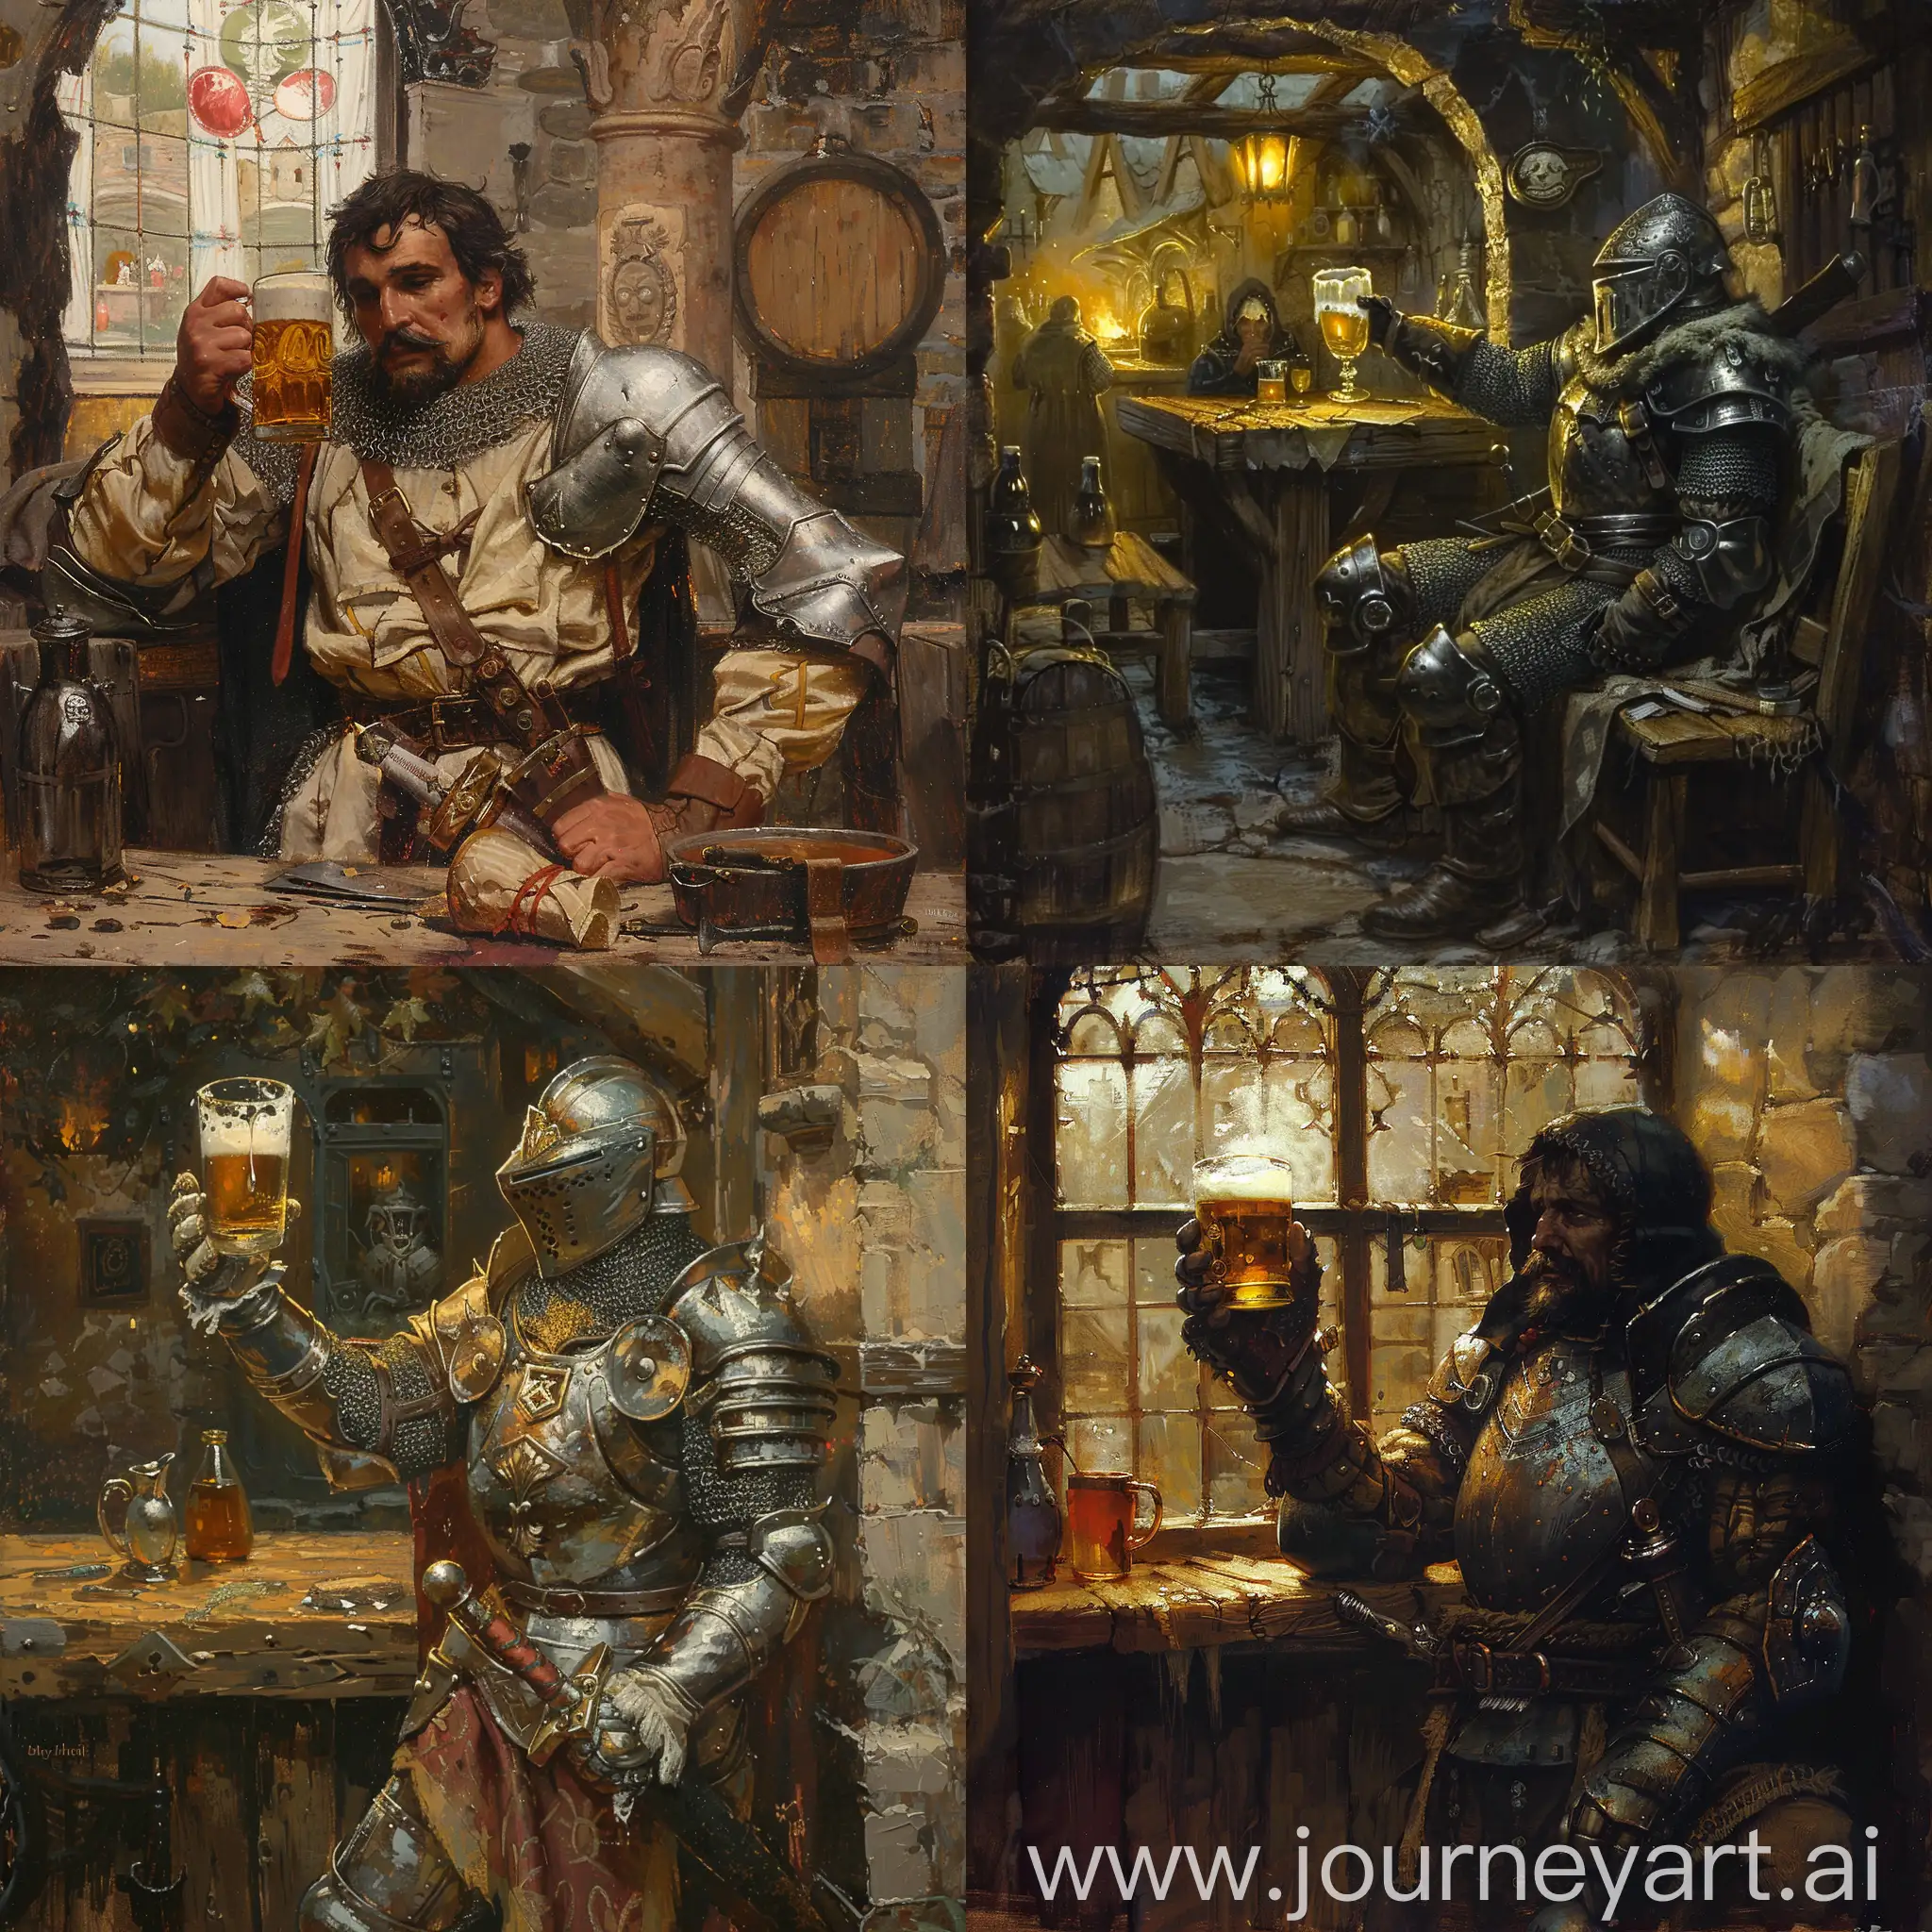 Knight-Enjoying-a-Mug-of-Beer-in-the-Tavern